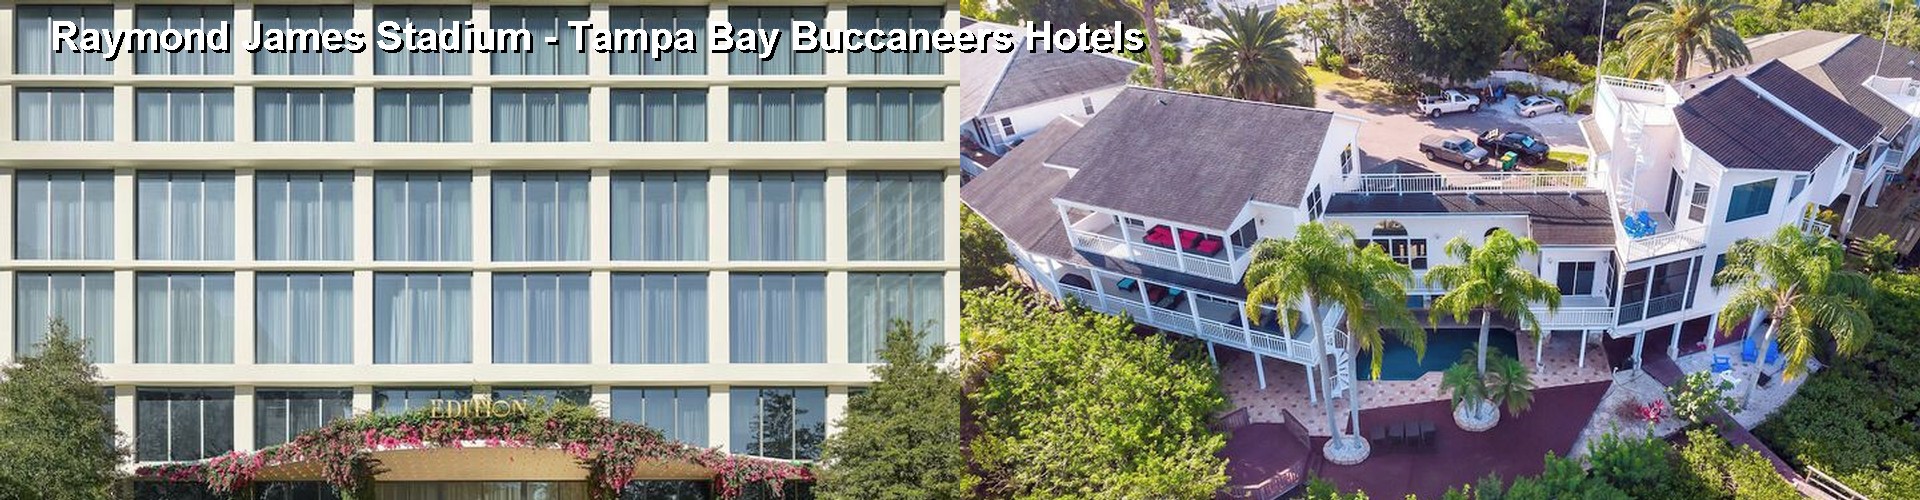 3 Best Hotels near Raymond James Stadium - Tampa Bay Buccaneers